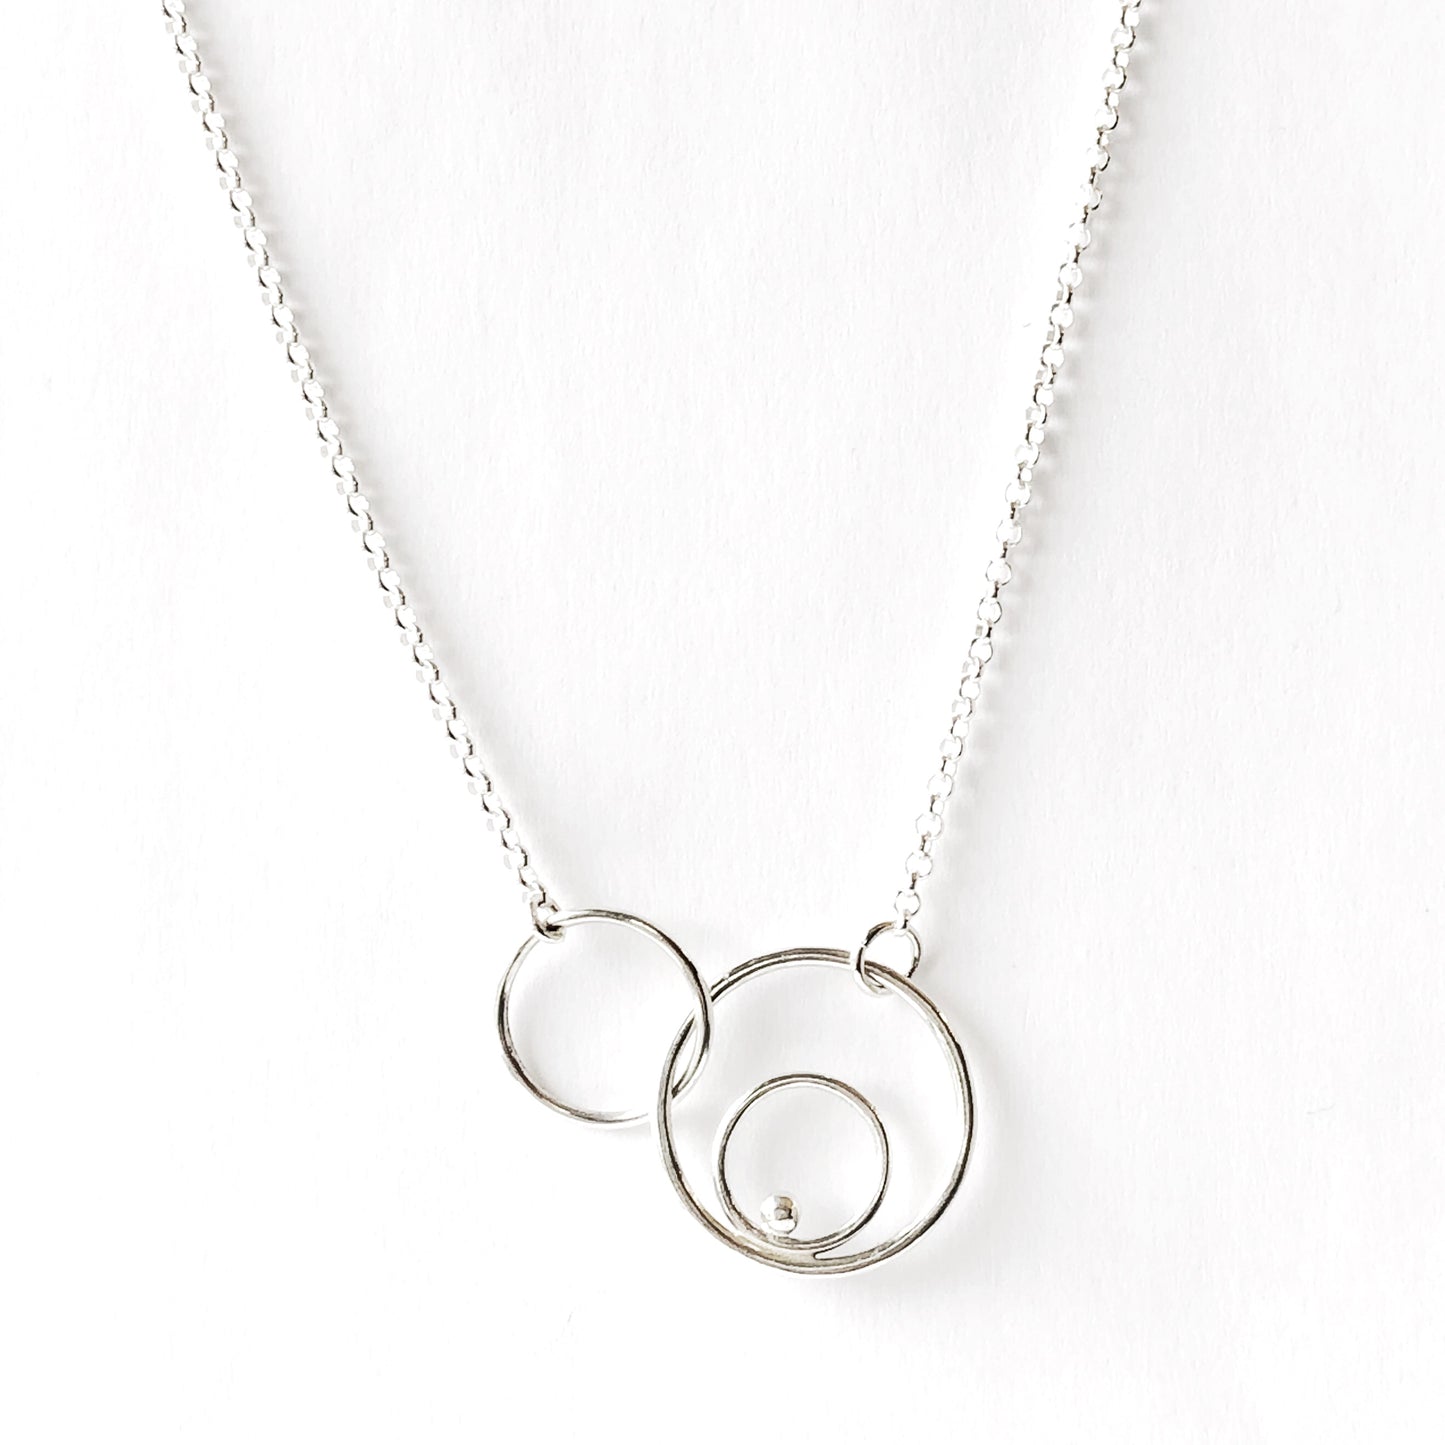 Silver orbital link necklace close up